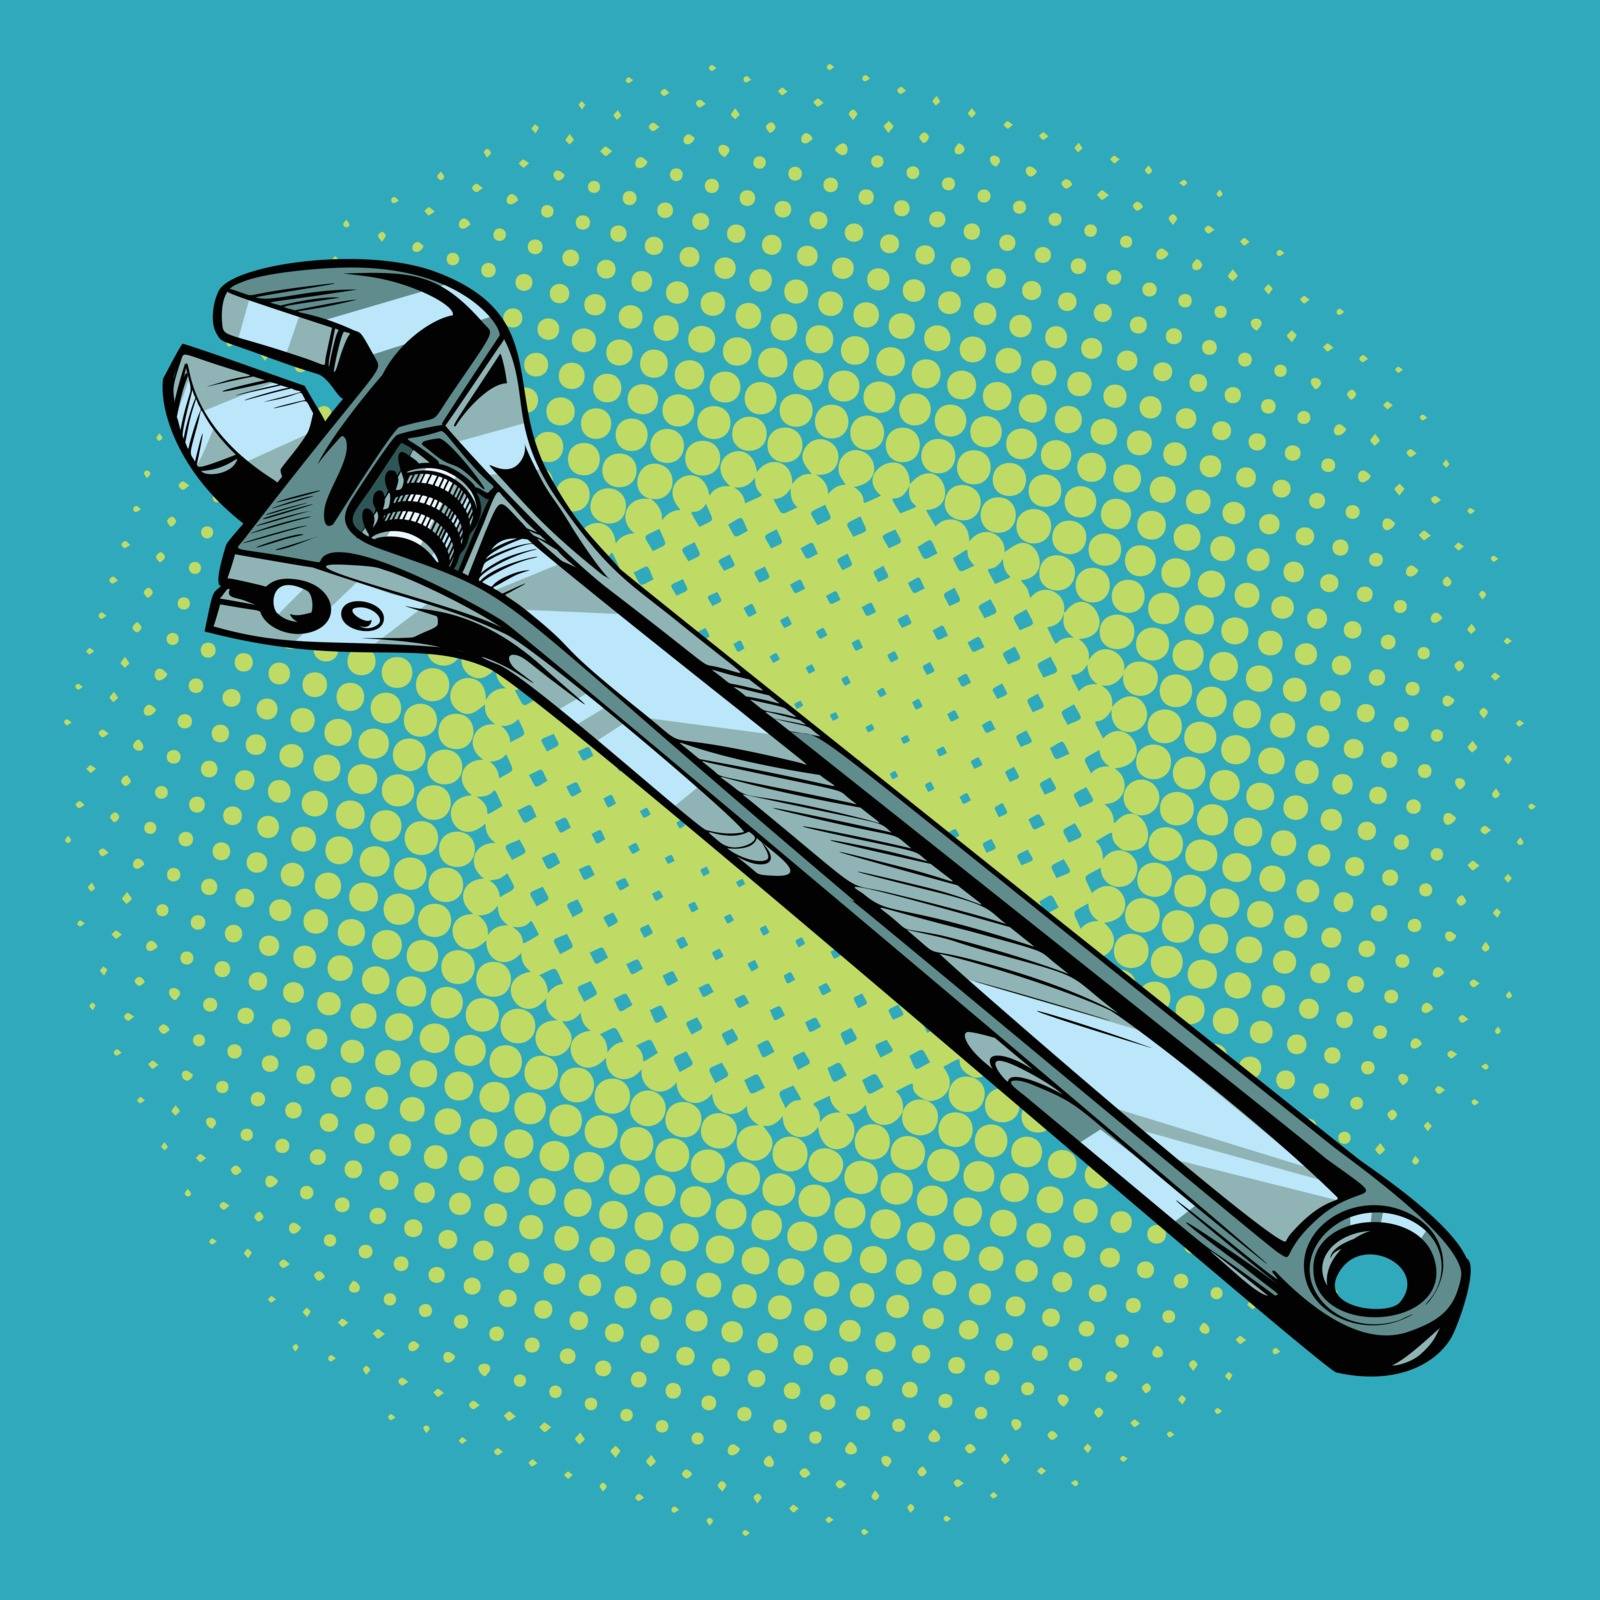 Adjustable wrench tool. Pop art retro vector illustration comic cartoon kitsch drawing